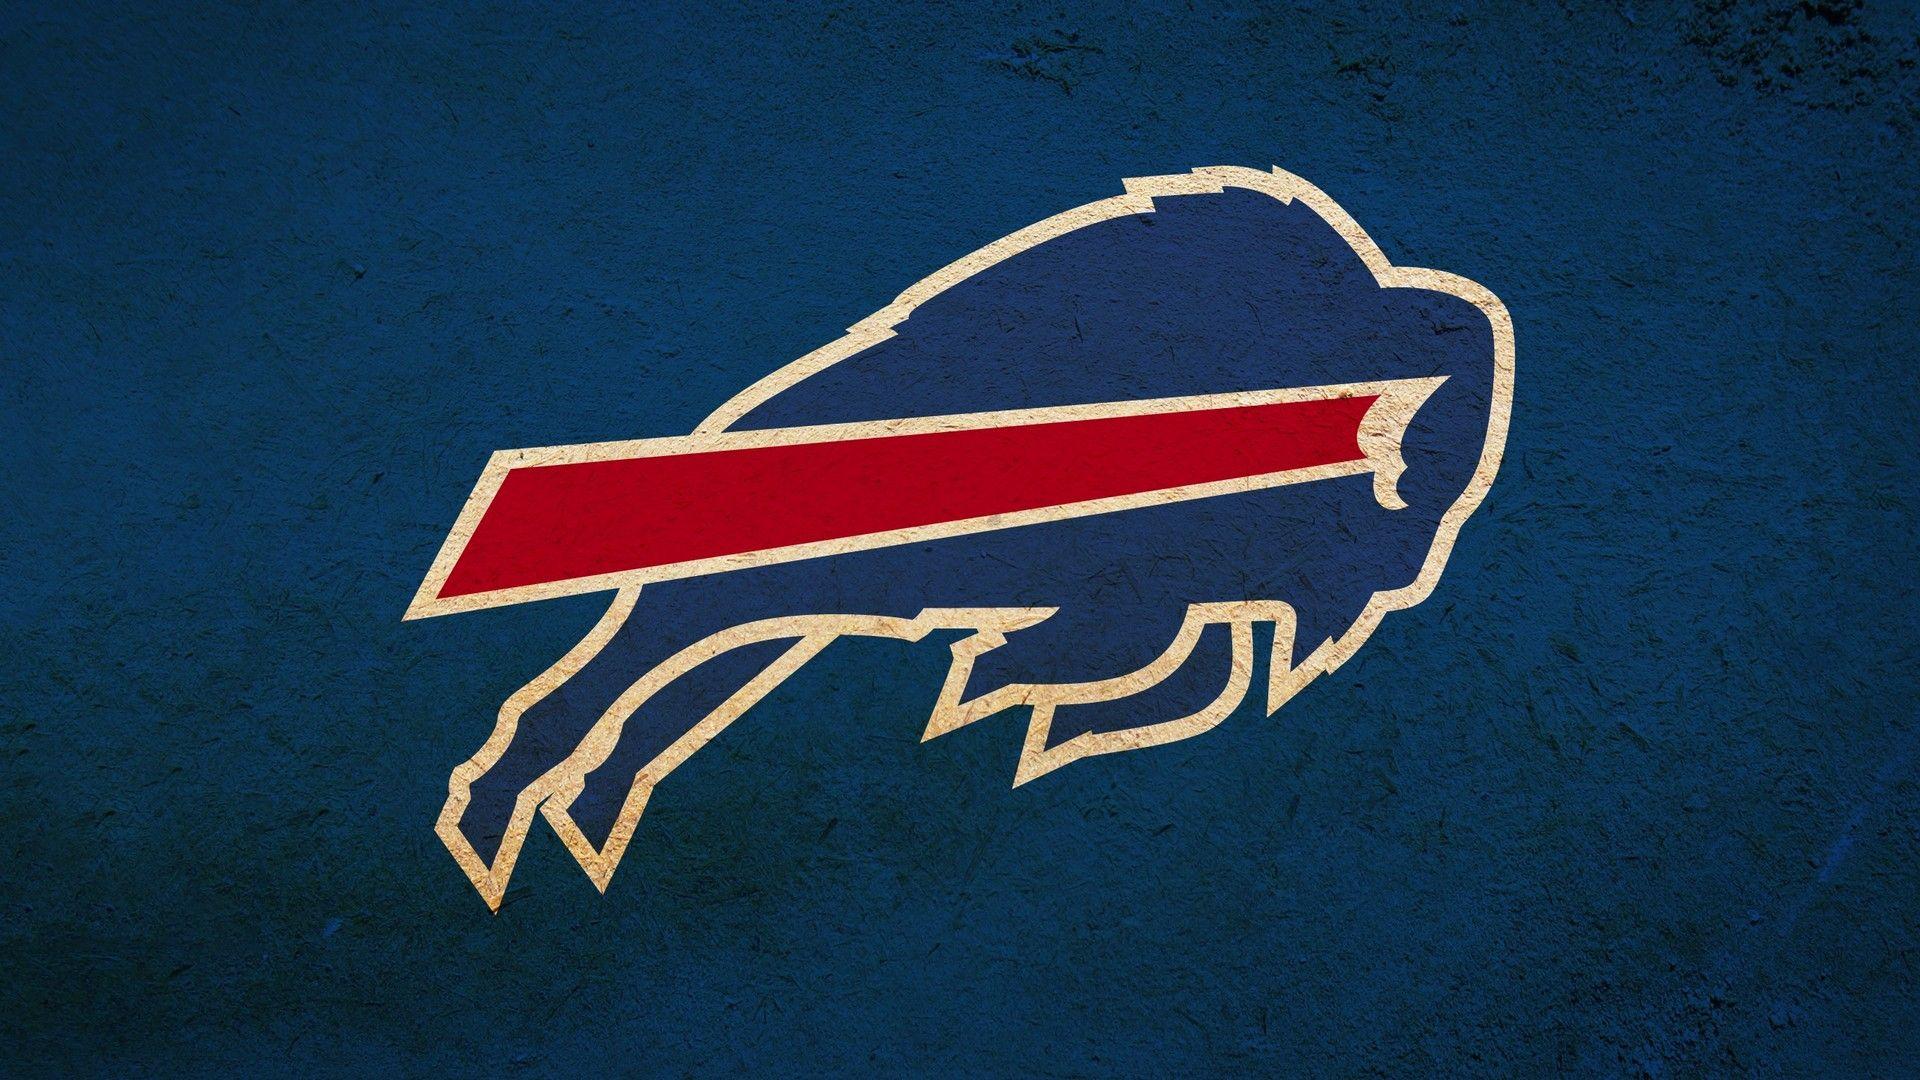 Buffalo Bills Team Wallpaper 2020kgtv.com.ua